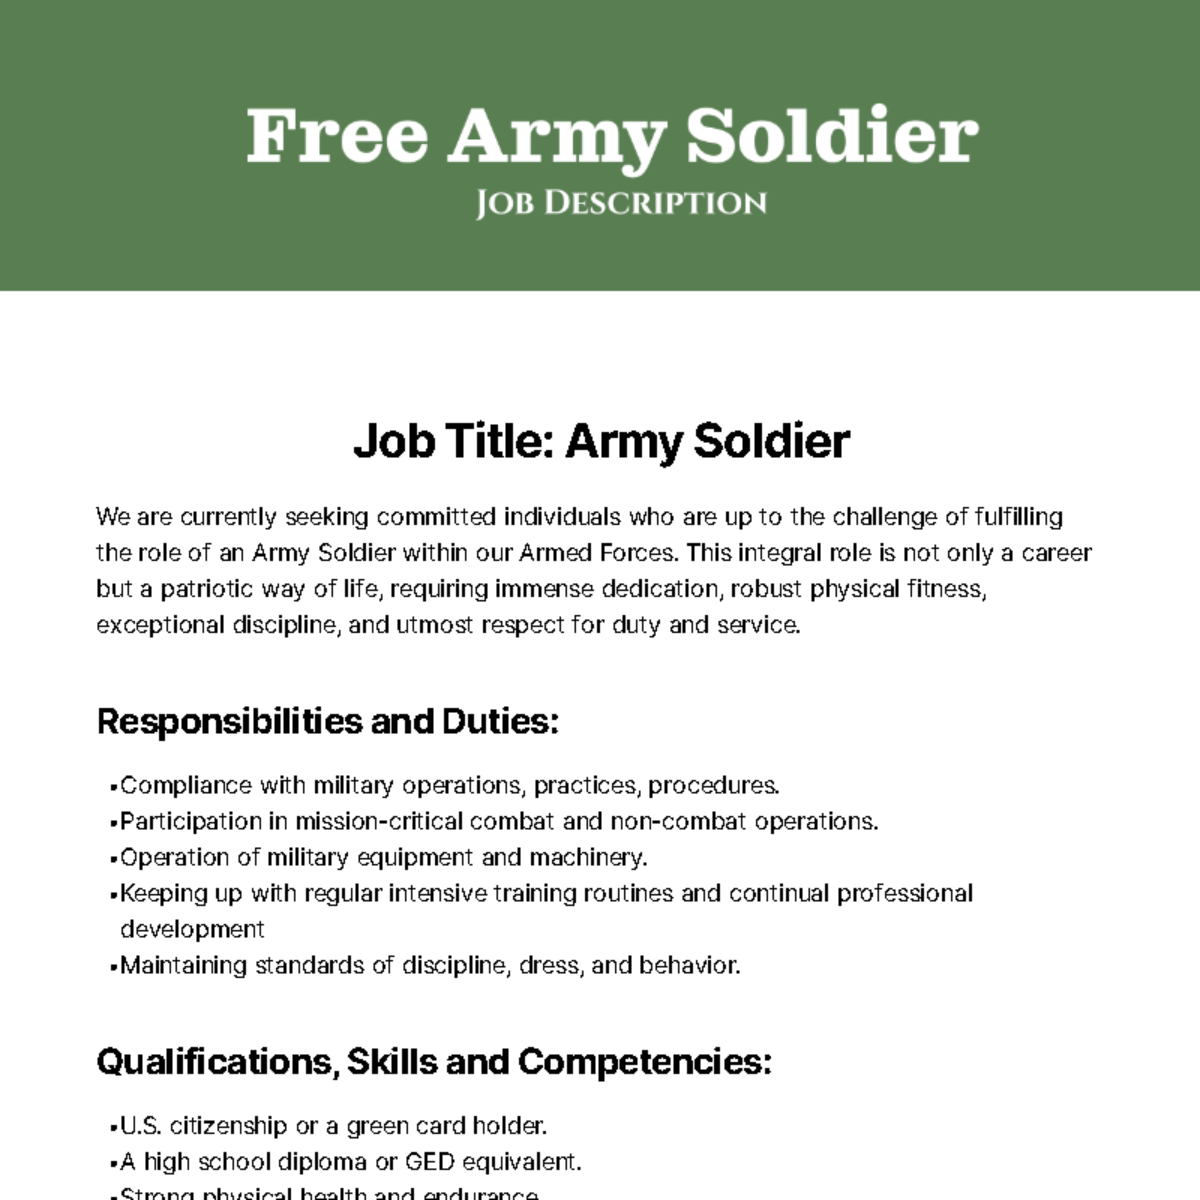 Free Army Soldier Job Description Template